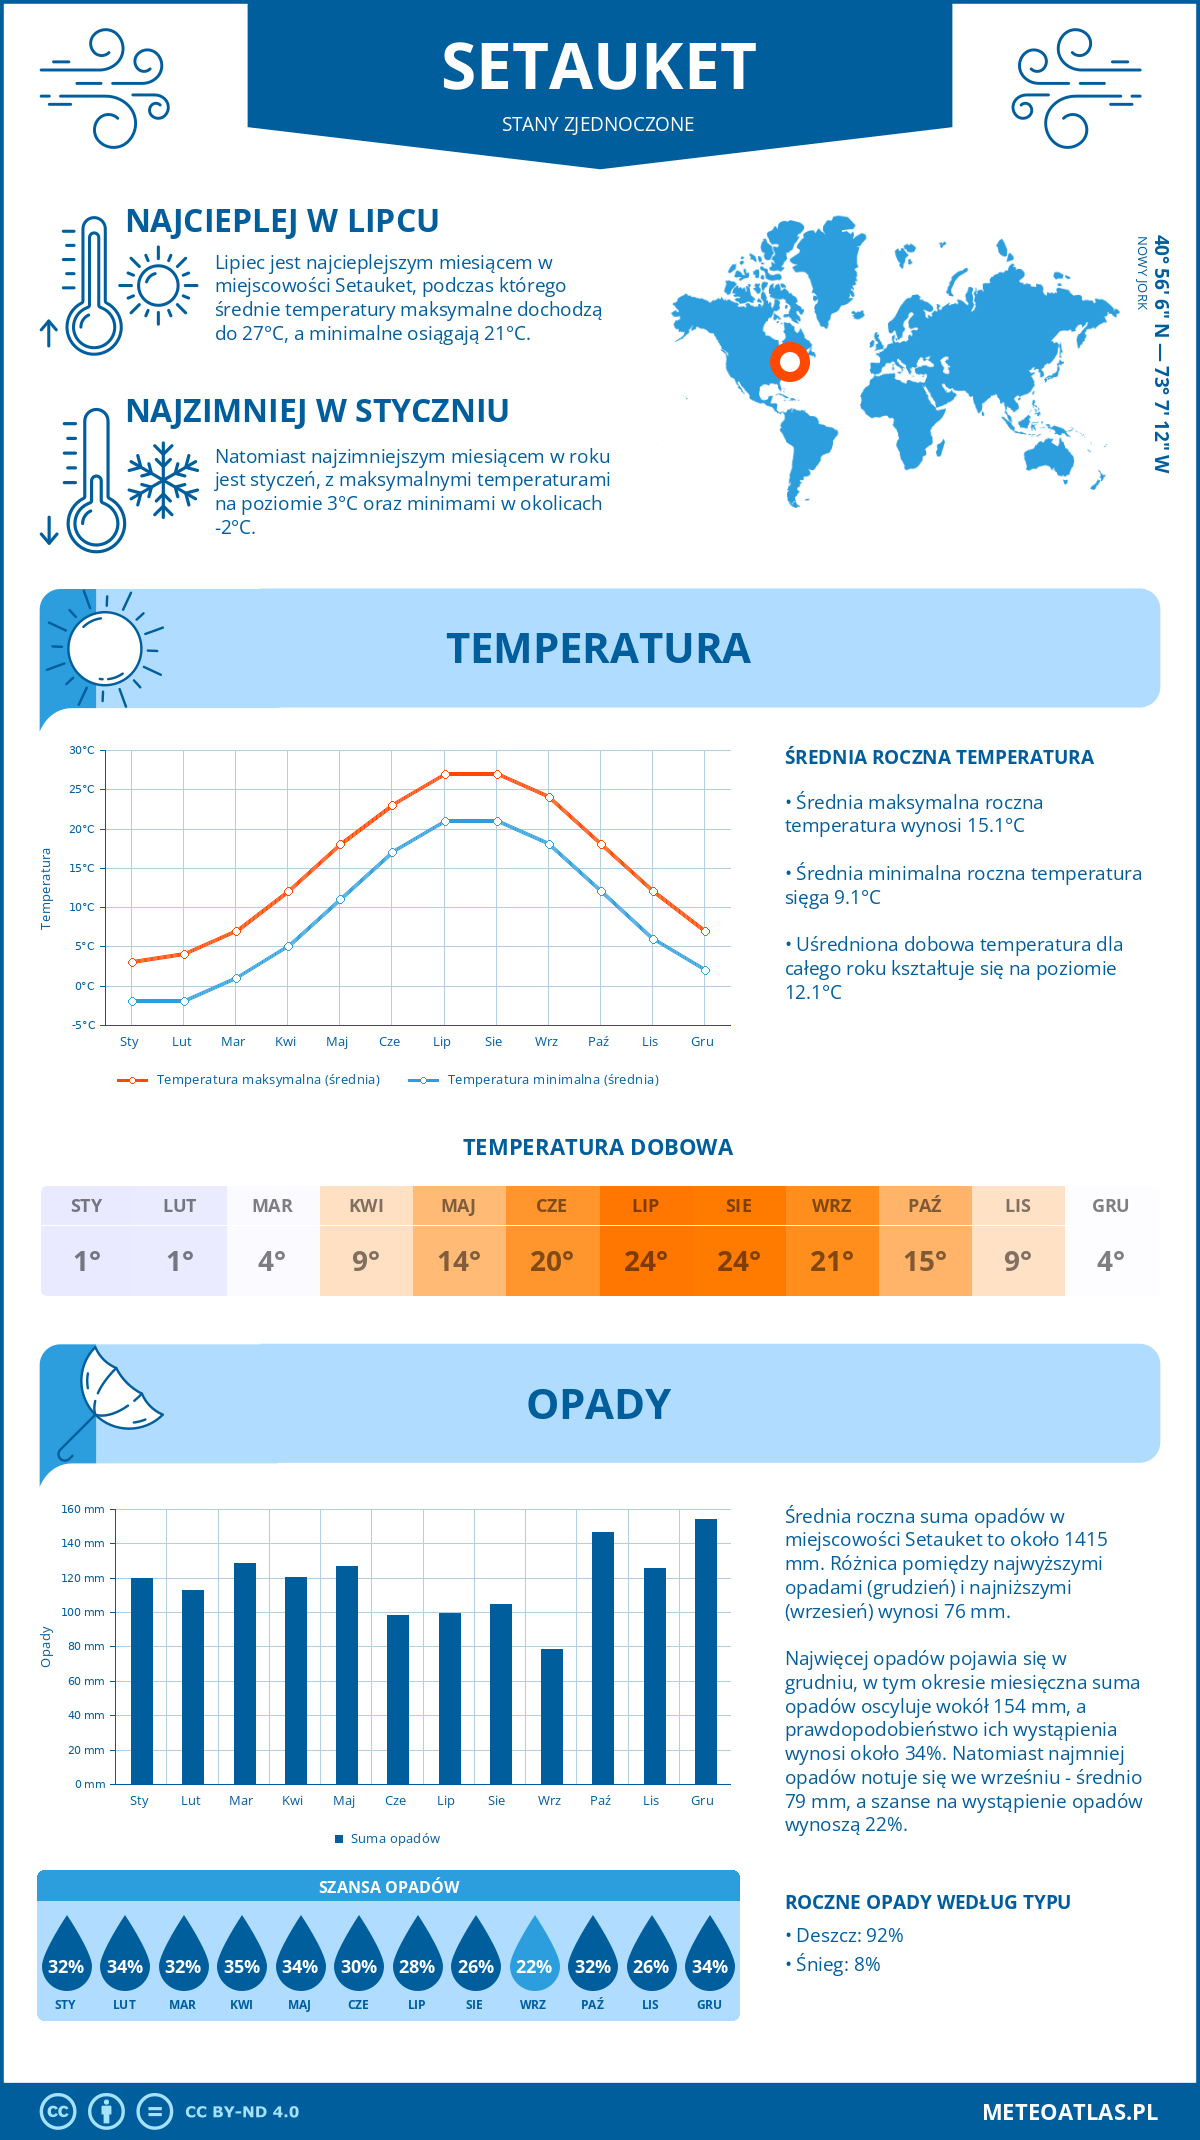 Pogoda Setauket (Stany Zjednoczone). Temperatura oraz opady.